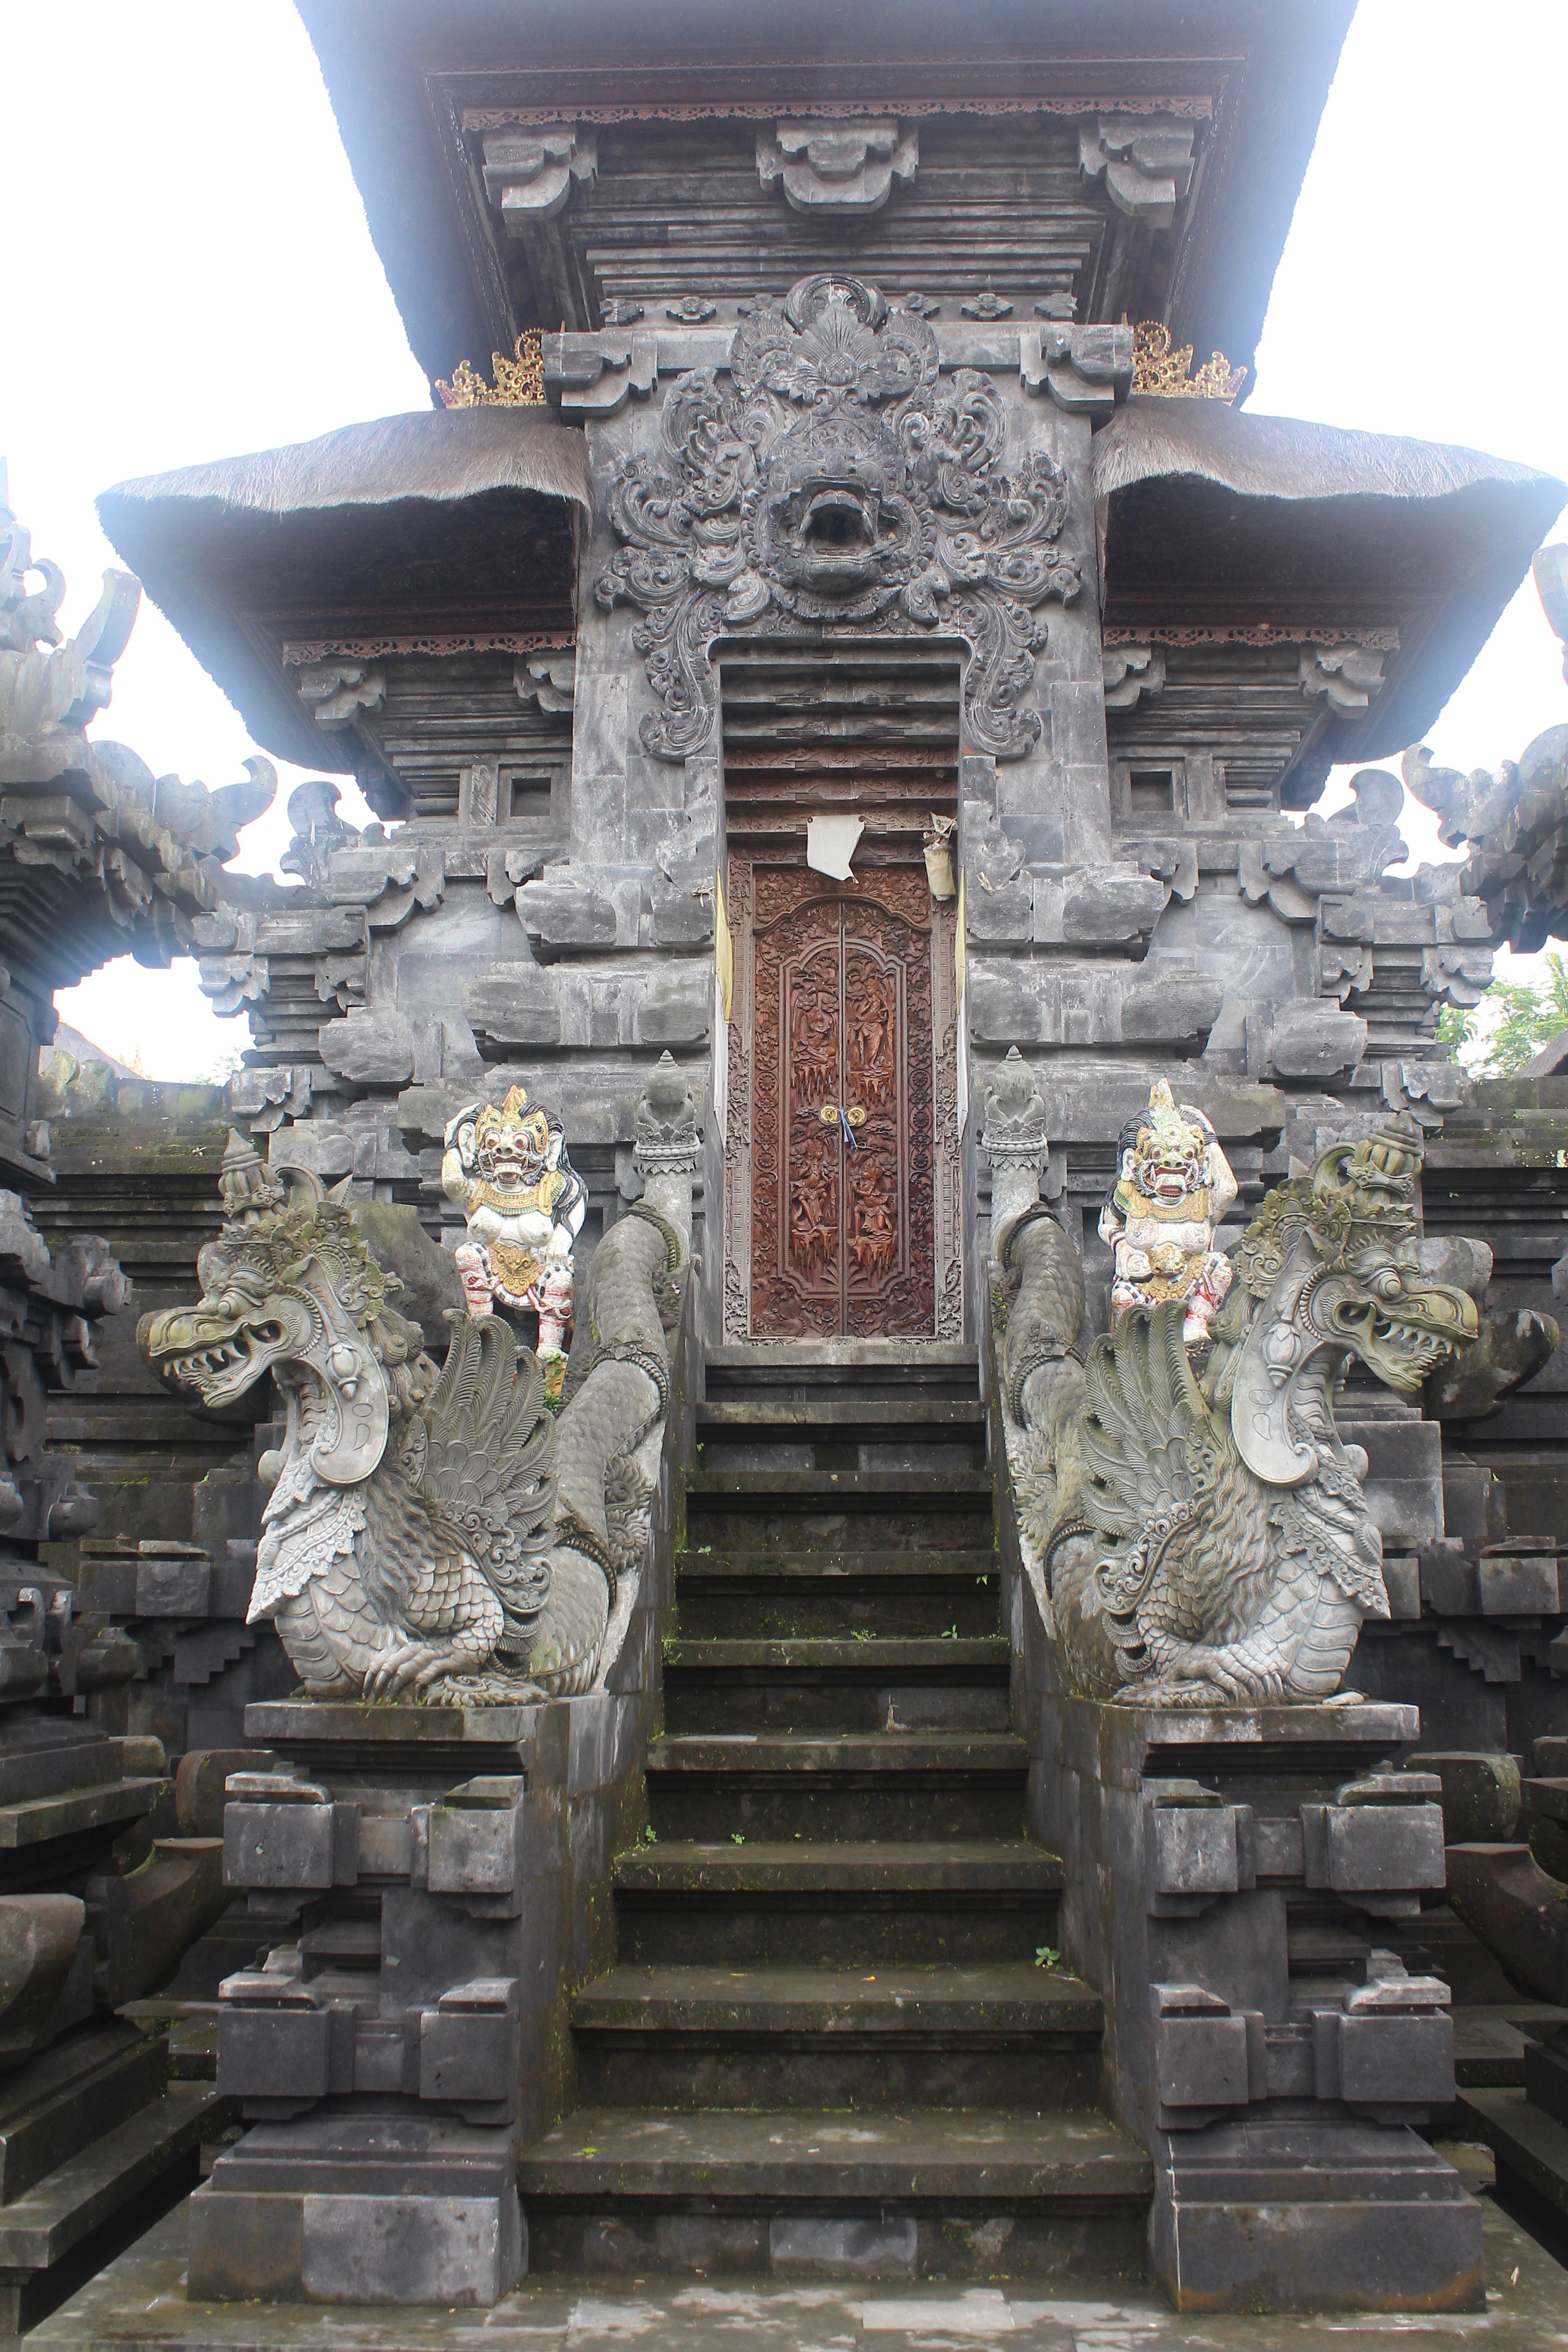 Shrine entrance flanked by serpent sculptures